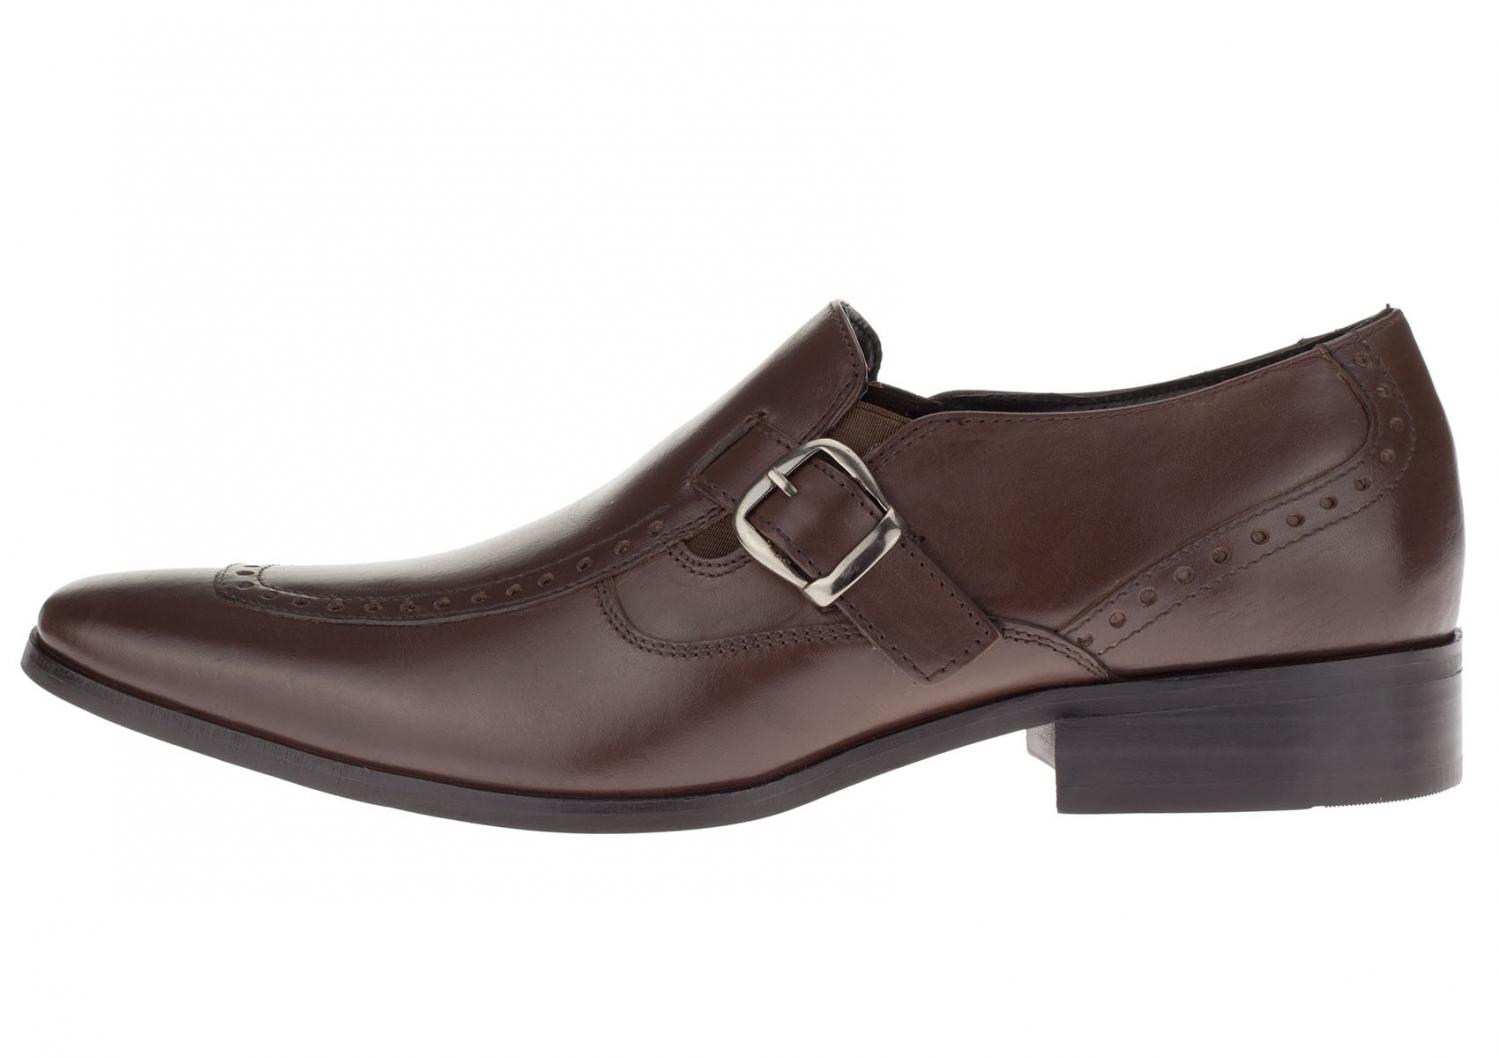 DTI GV Executive Men's Leather Dress Shoe Celio Slip-On Loafer Brown - image 5 of 7